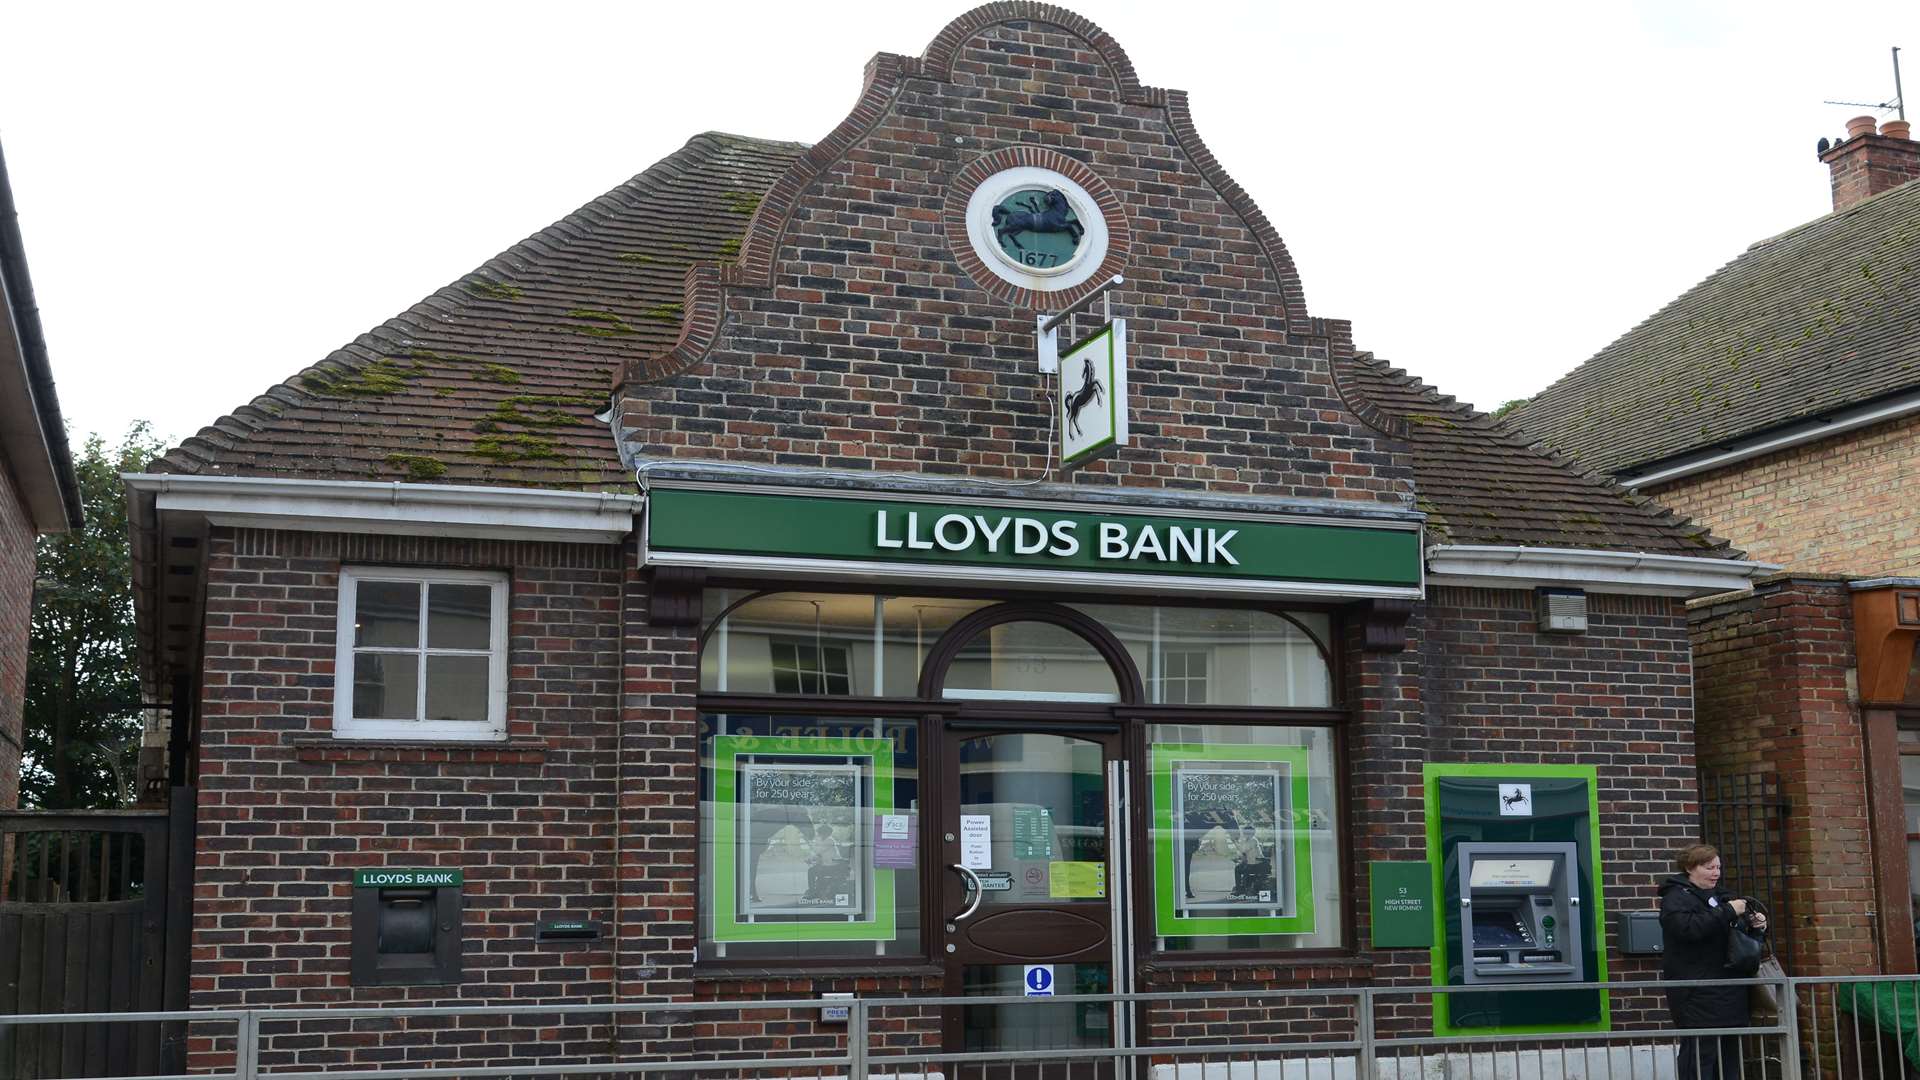 Lloyds in New Romney, the only bank branch left in Romney Marsh.